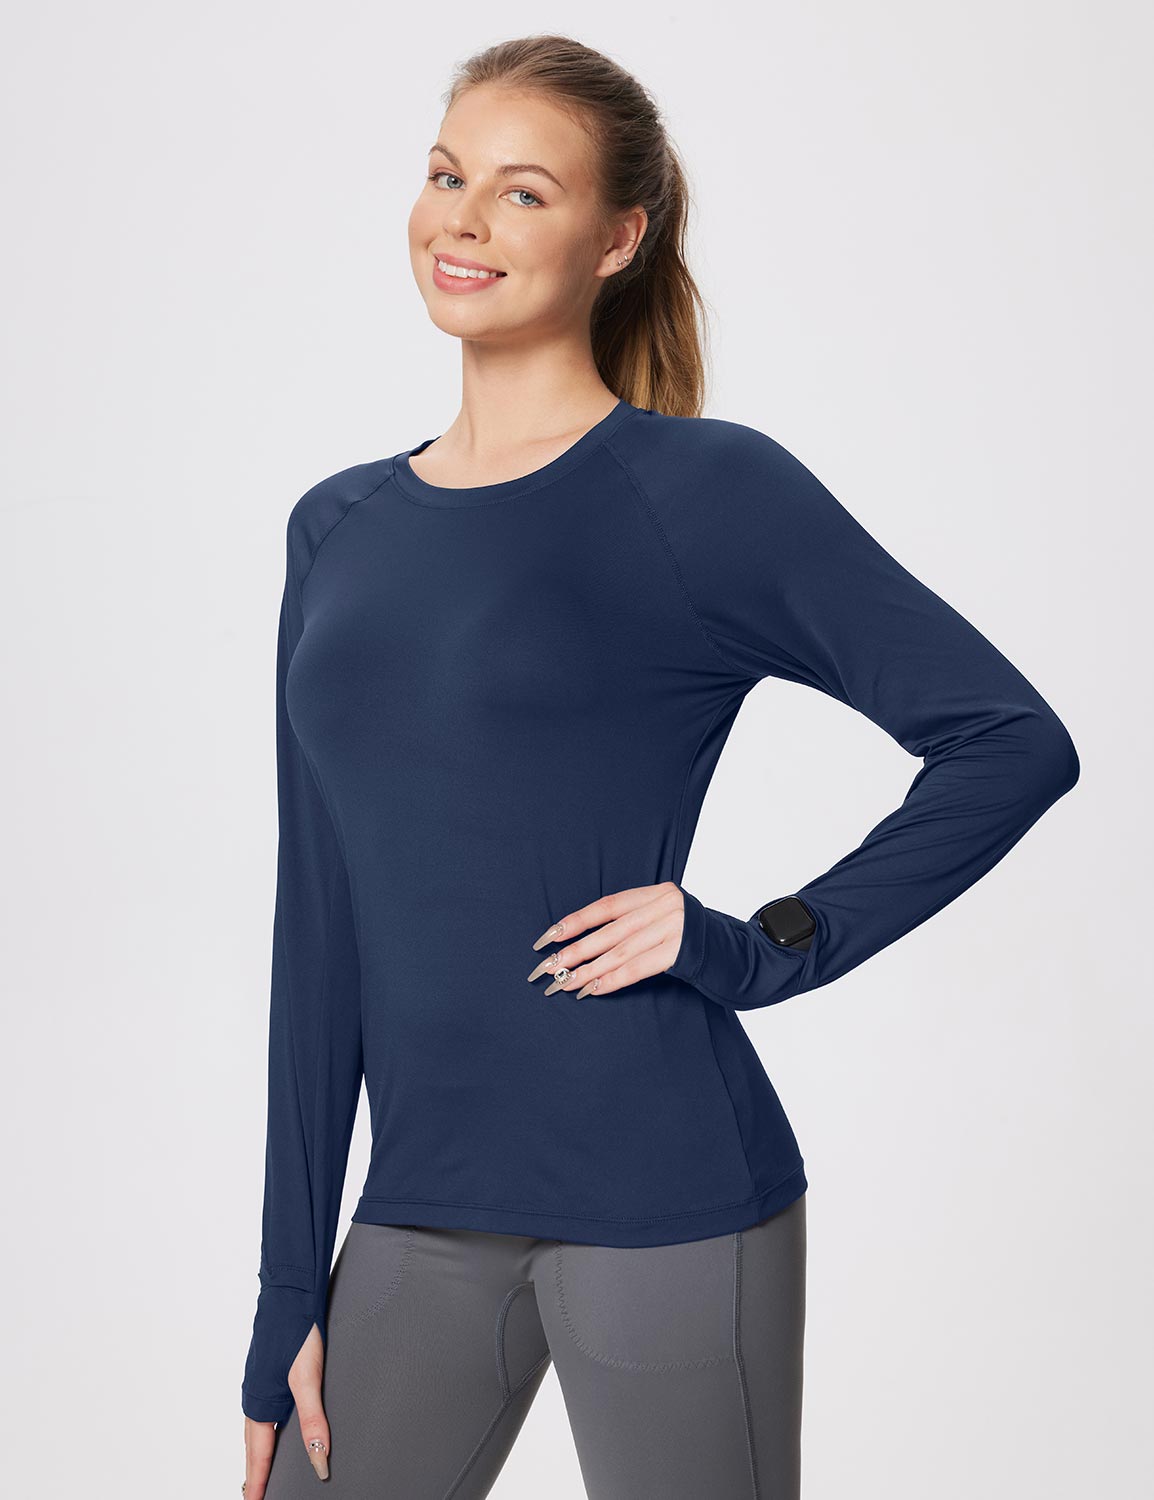  Womens Running Shirts Long Sleeve Workout Shirts Quick Dry  UPF50+ Sun Shirts Lightweight Watch Window Workout Tops Gray L